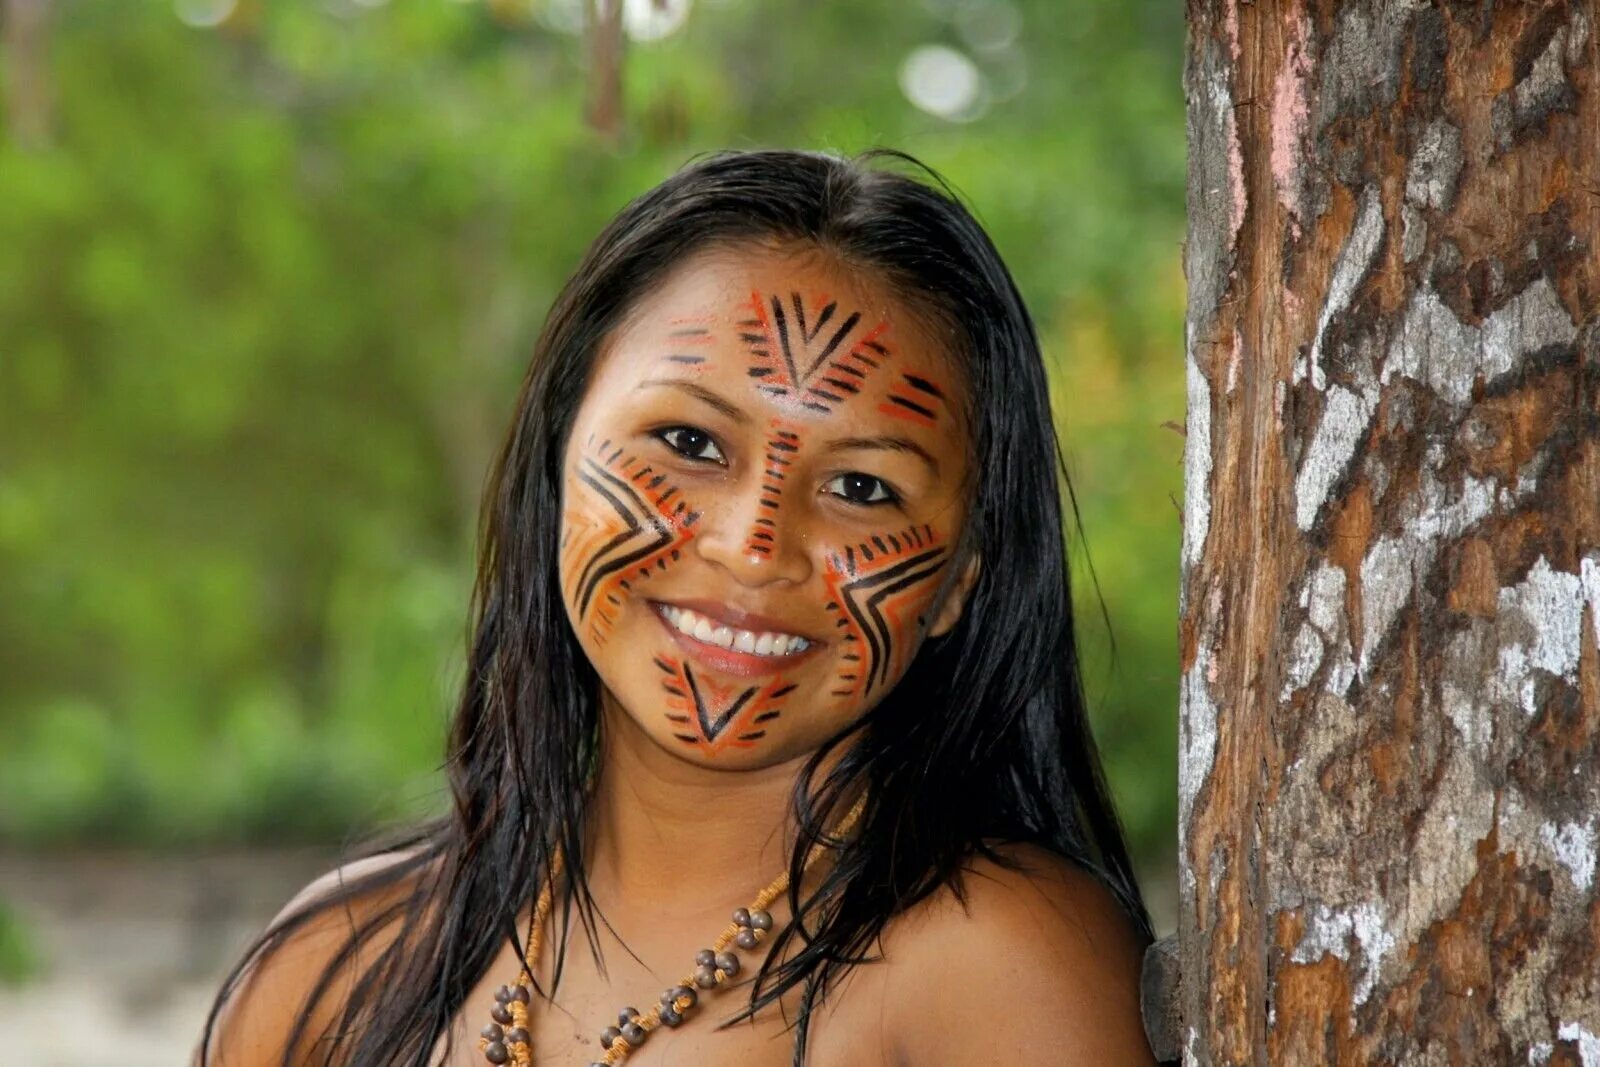 Selva lapiedra. Бразилия Амазонские индейцы женщины. Индейцы племени яномамо. Индейцы амазонки Яномами. Джимми Нельсон Маори.